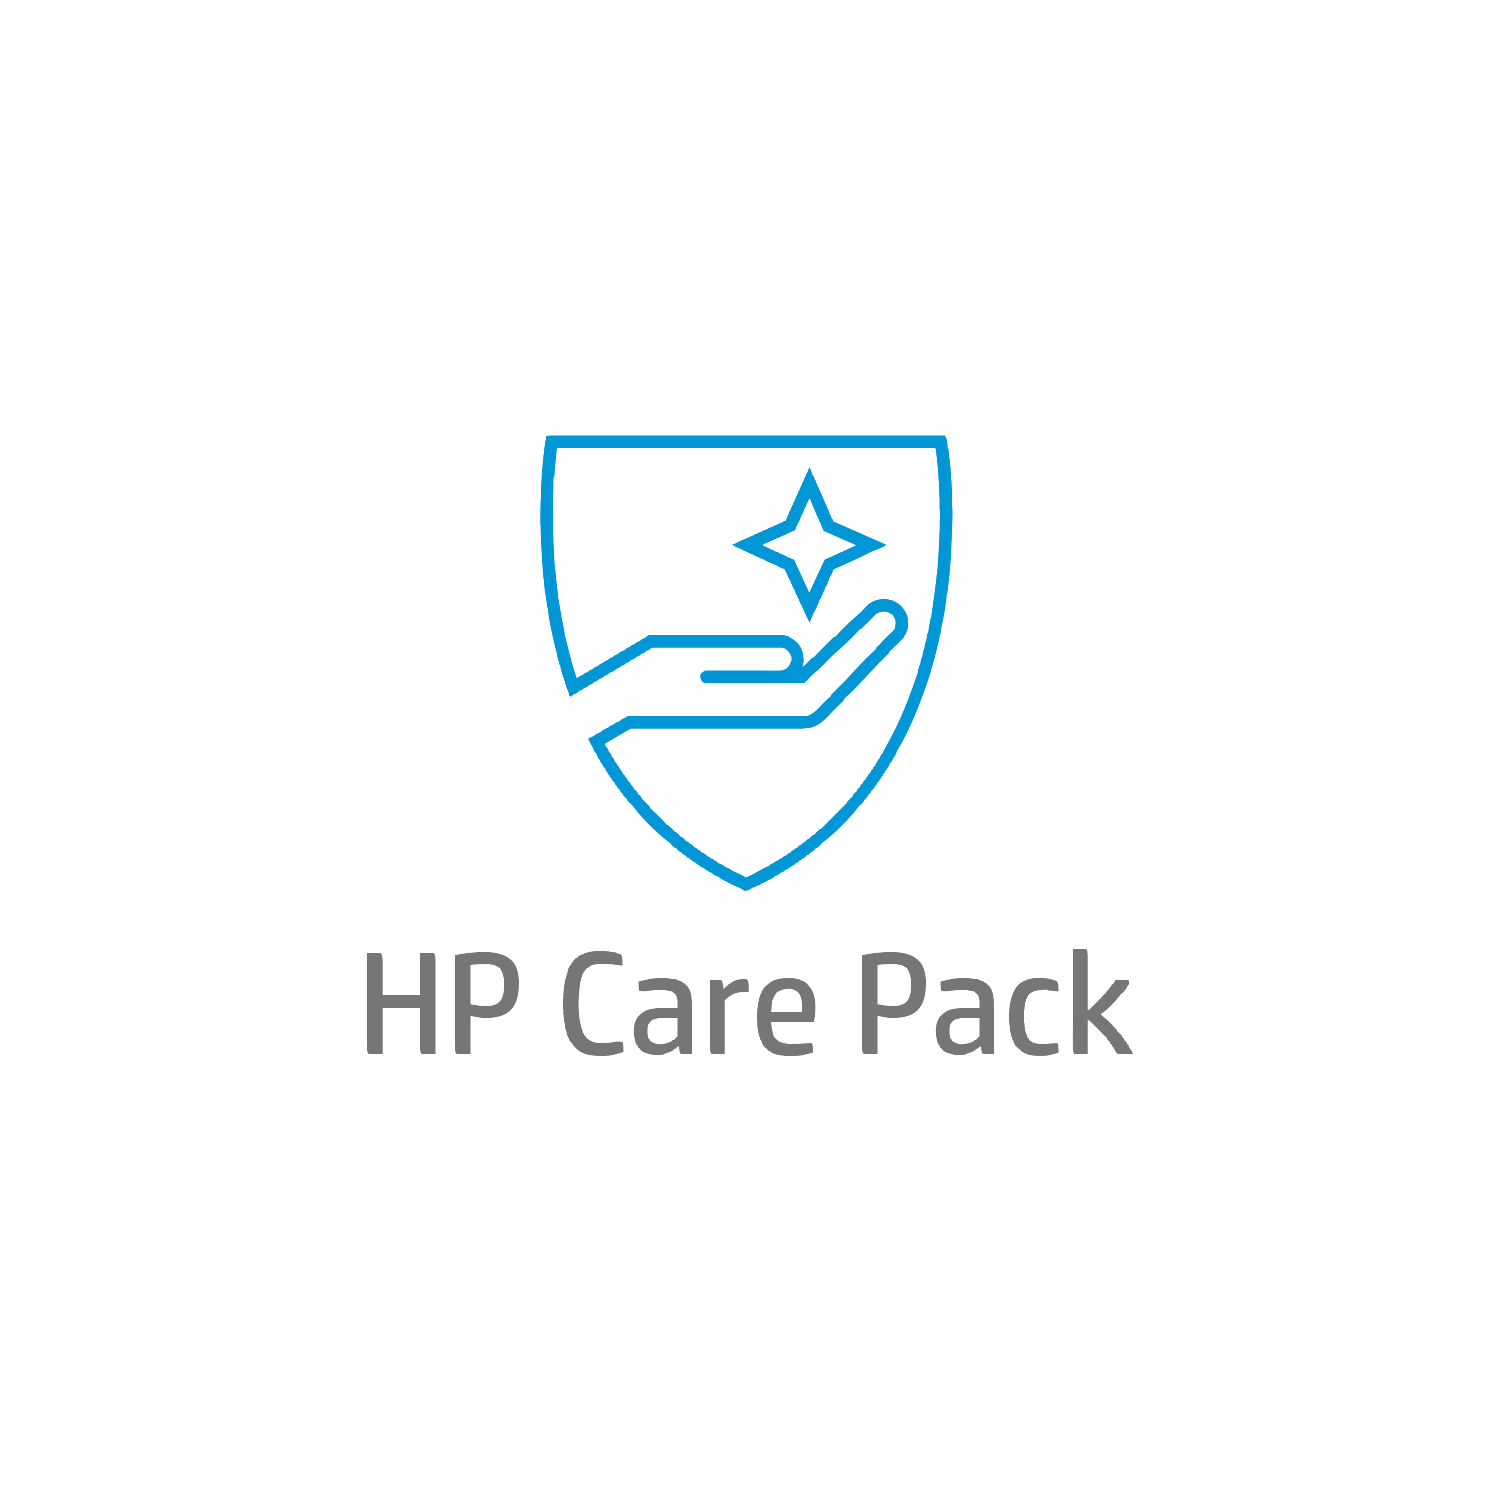 Bild von HP Electronic HP Care Pack Parts Coverage Hardware - Ausgabegeräte Service & Support